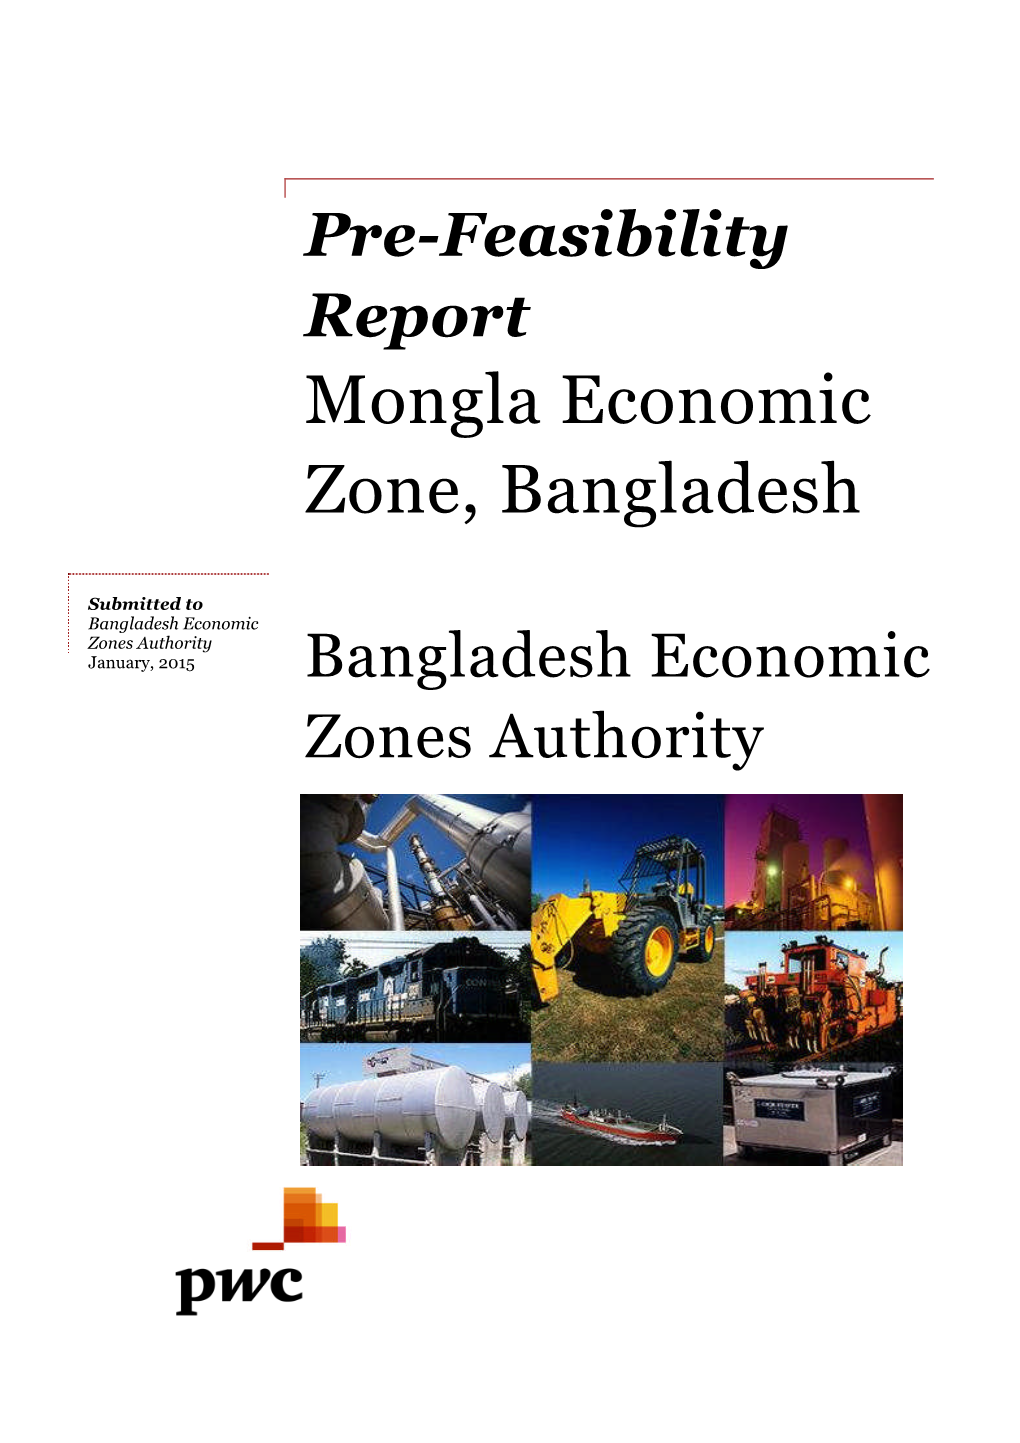 Mongla Economic Zone, Bangladesh